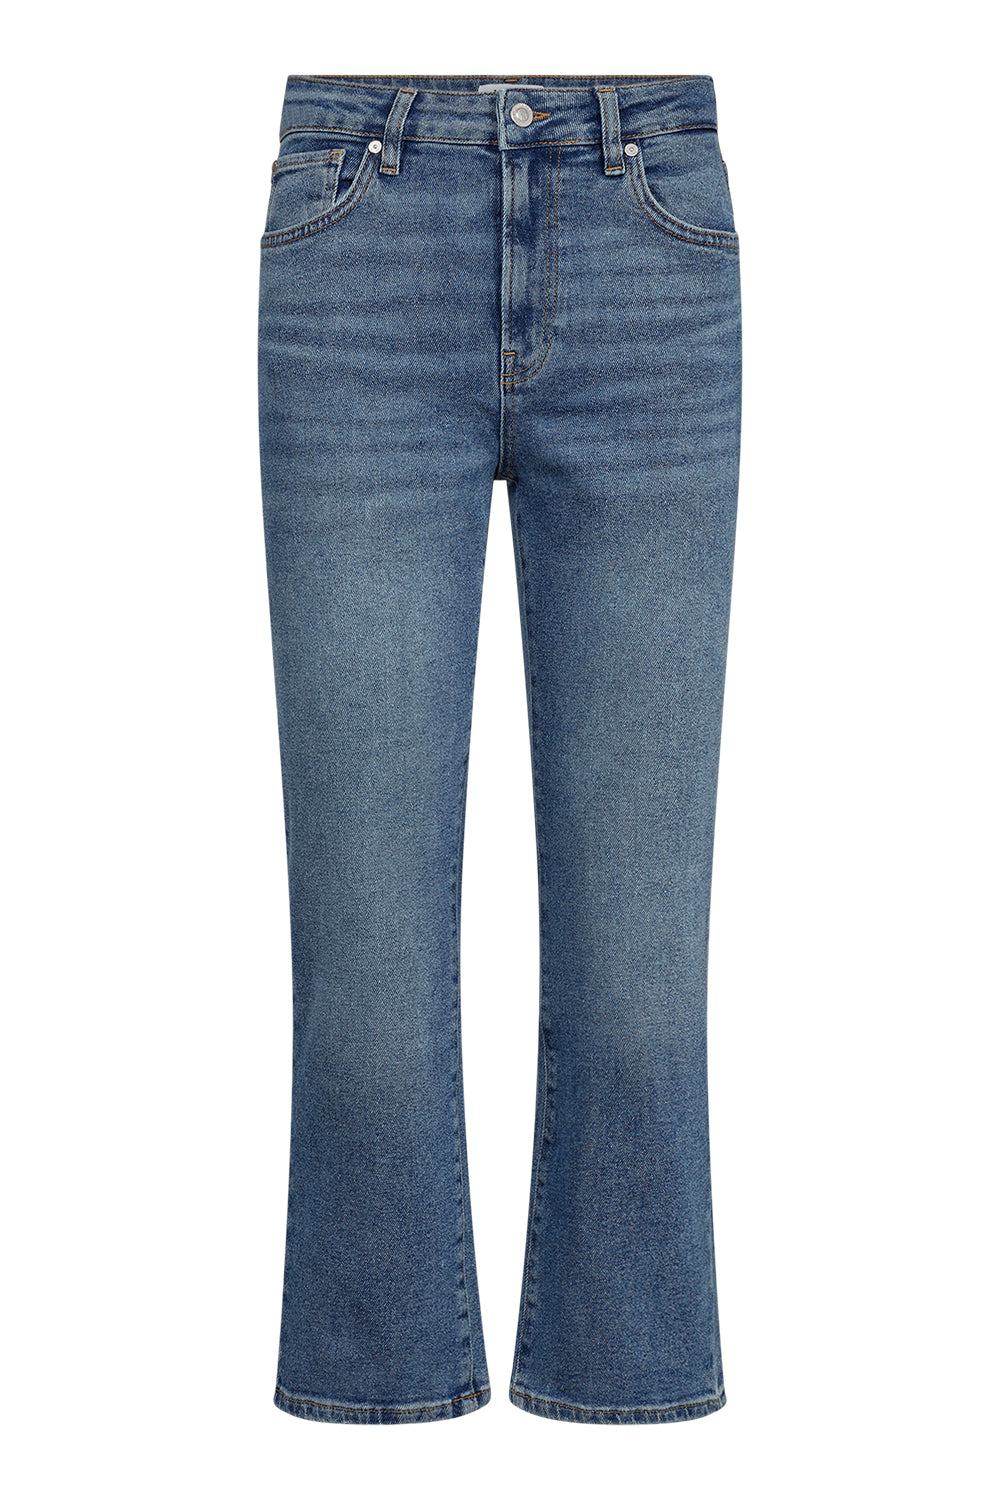 IVY Copenhagen IVY-Frida Jeans Wash Vigo Jeans & Pants 51 Denim Blue